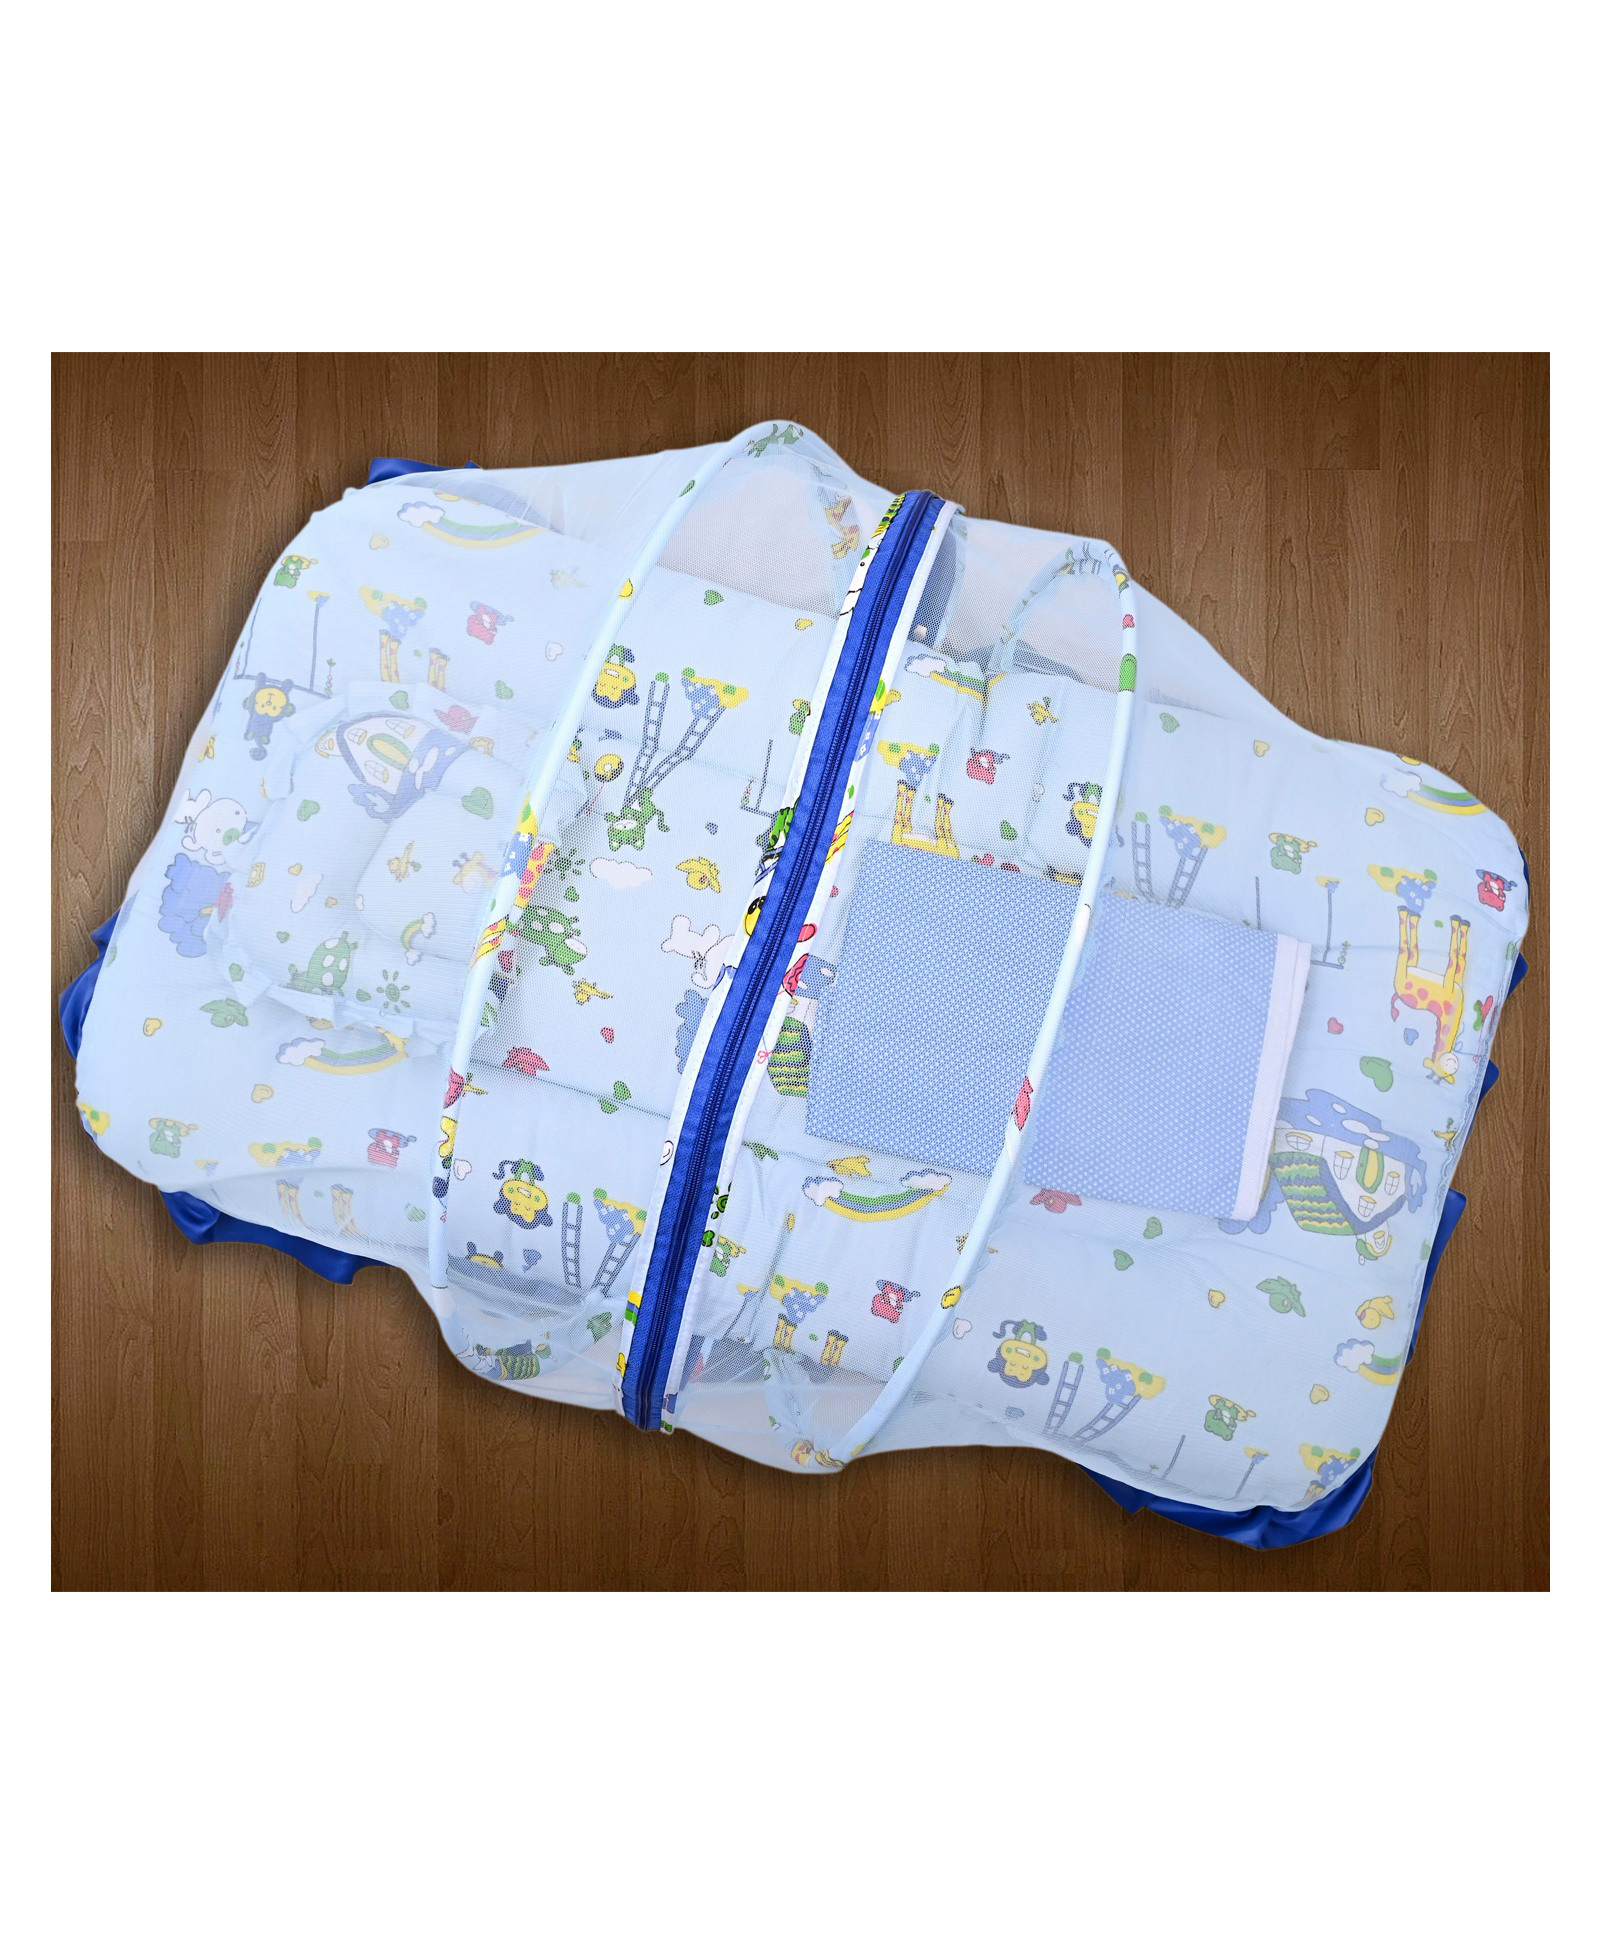 Blue Alphabet Animals Crib Liner Protector Pad for Standard Crib Cartoon Crib Mesh Cloth 4 Piece Set 